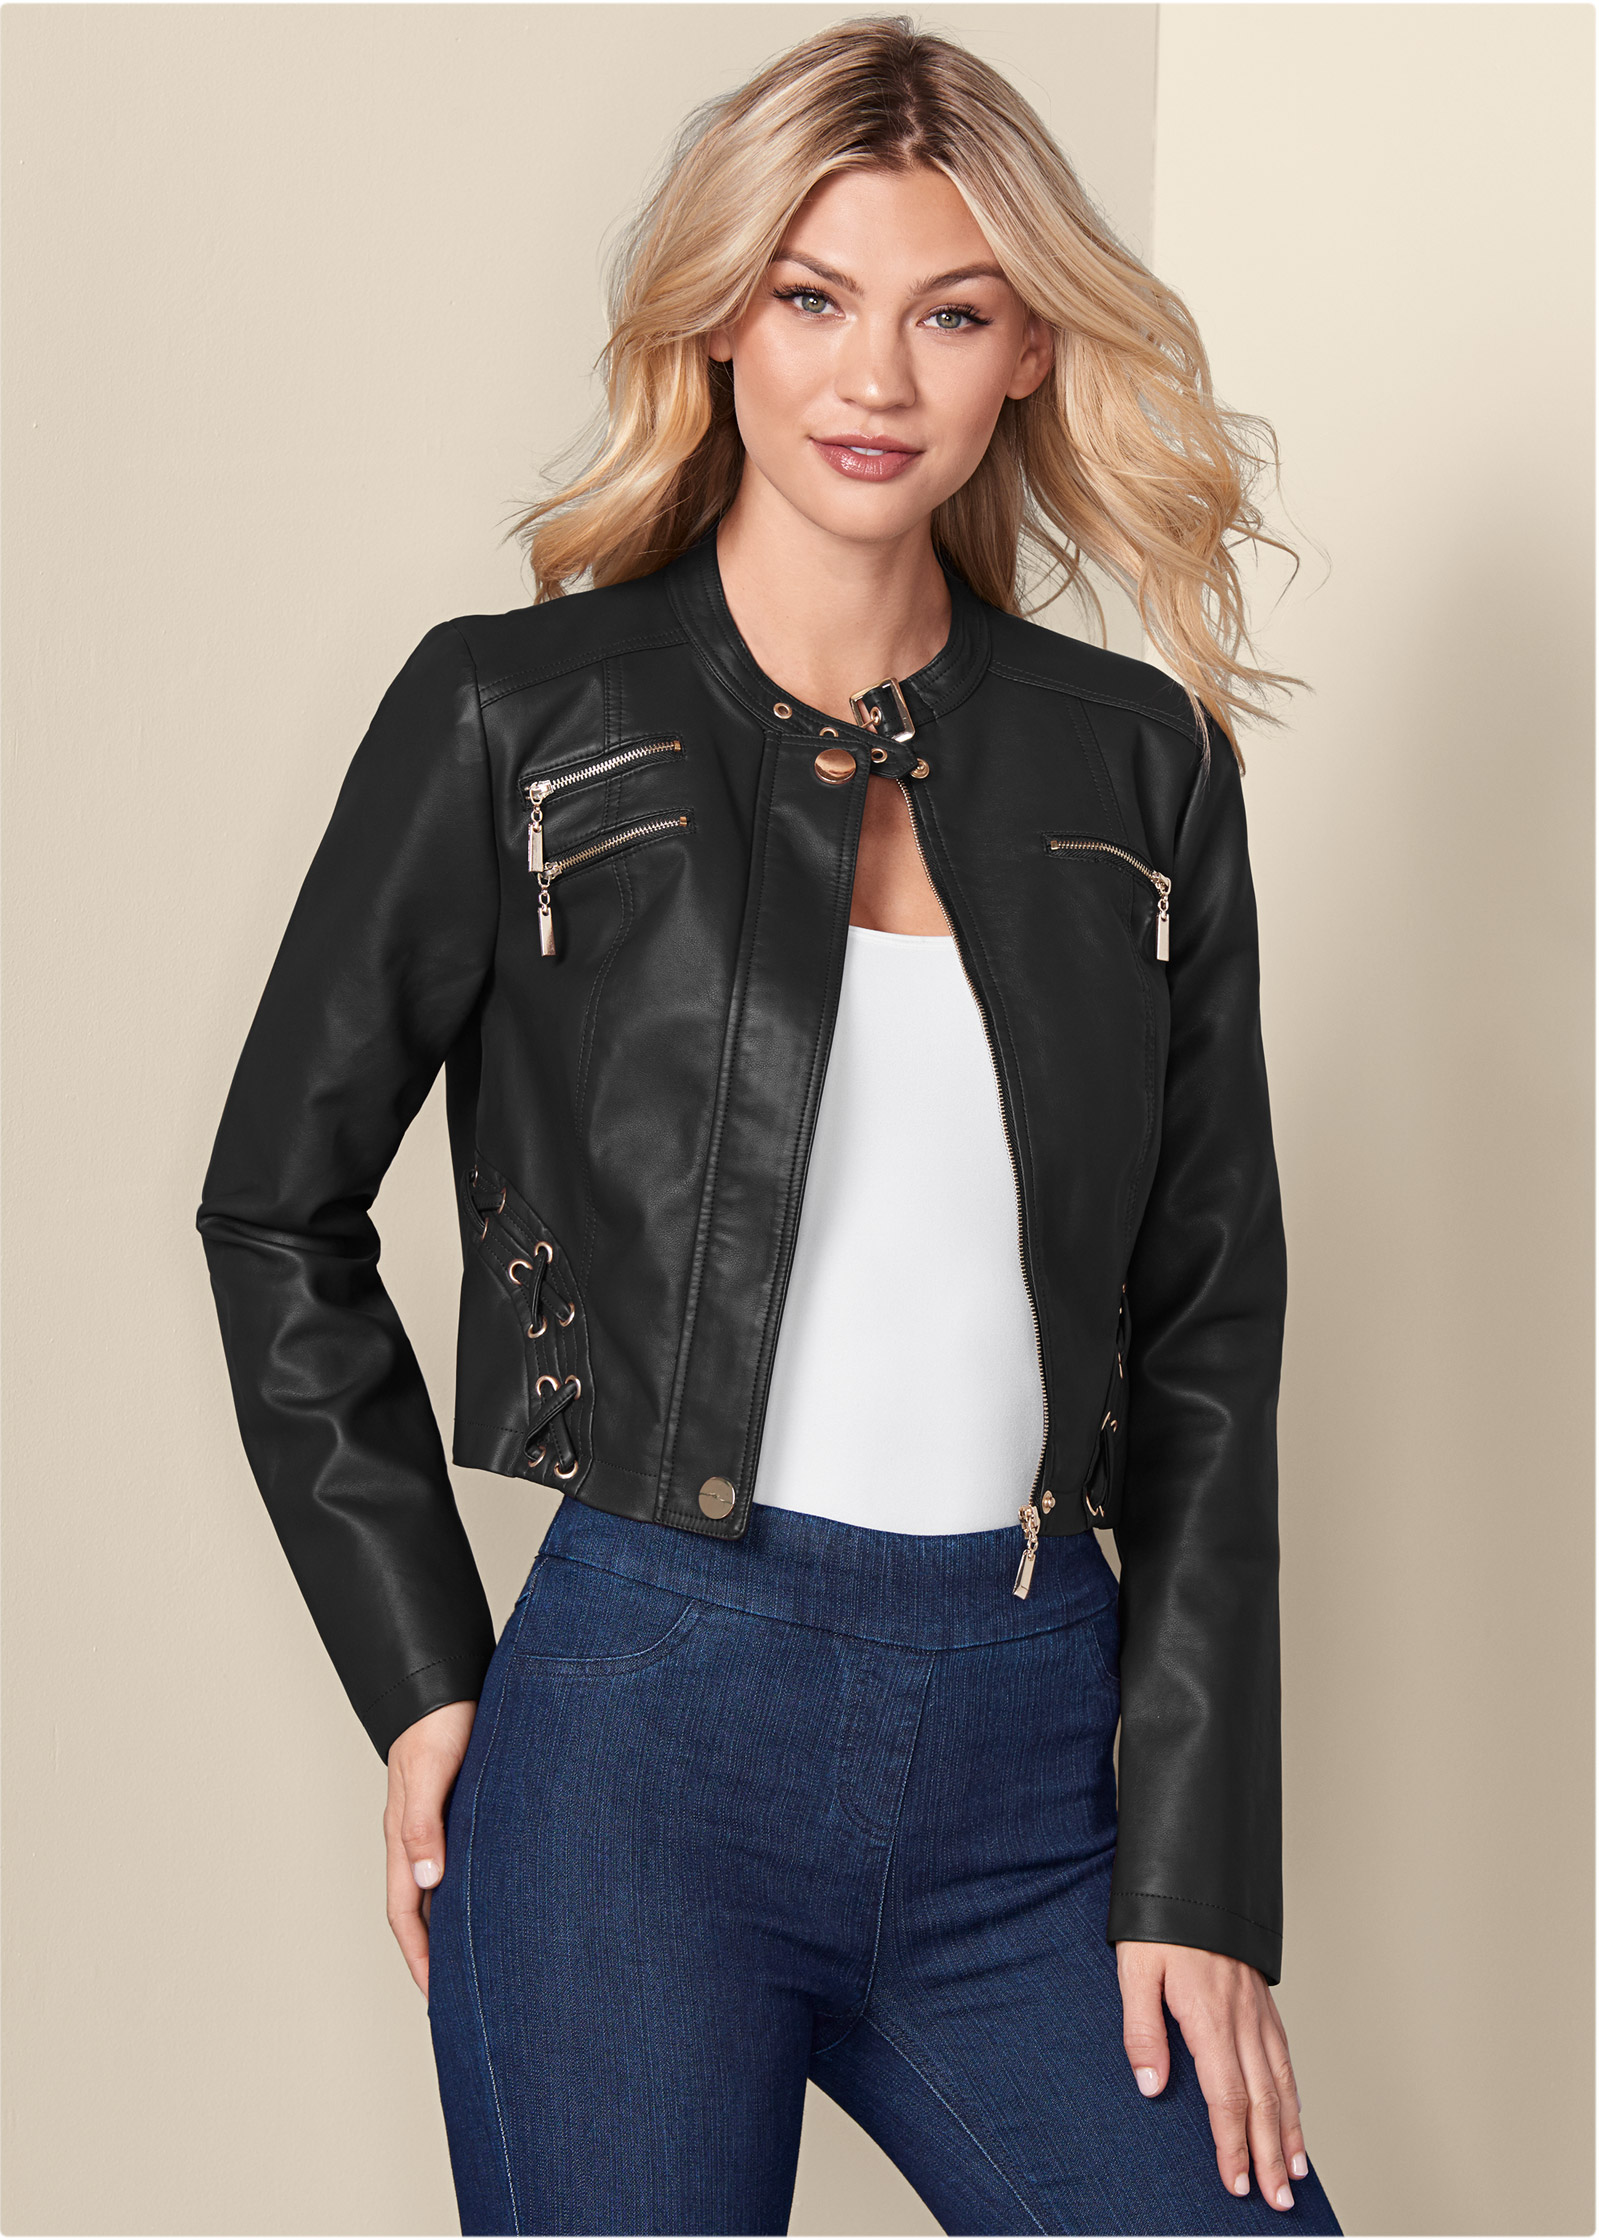 Black S NoName blazer WOMEN FASHION Jackets Leatherette discount 90% 